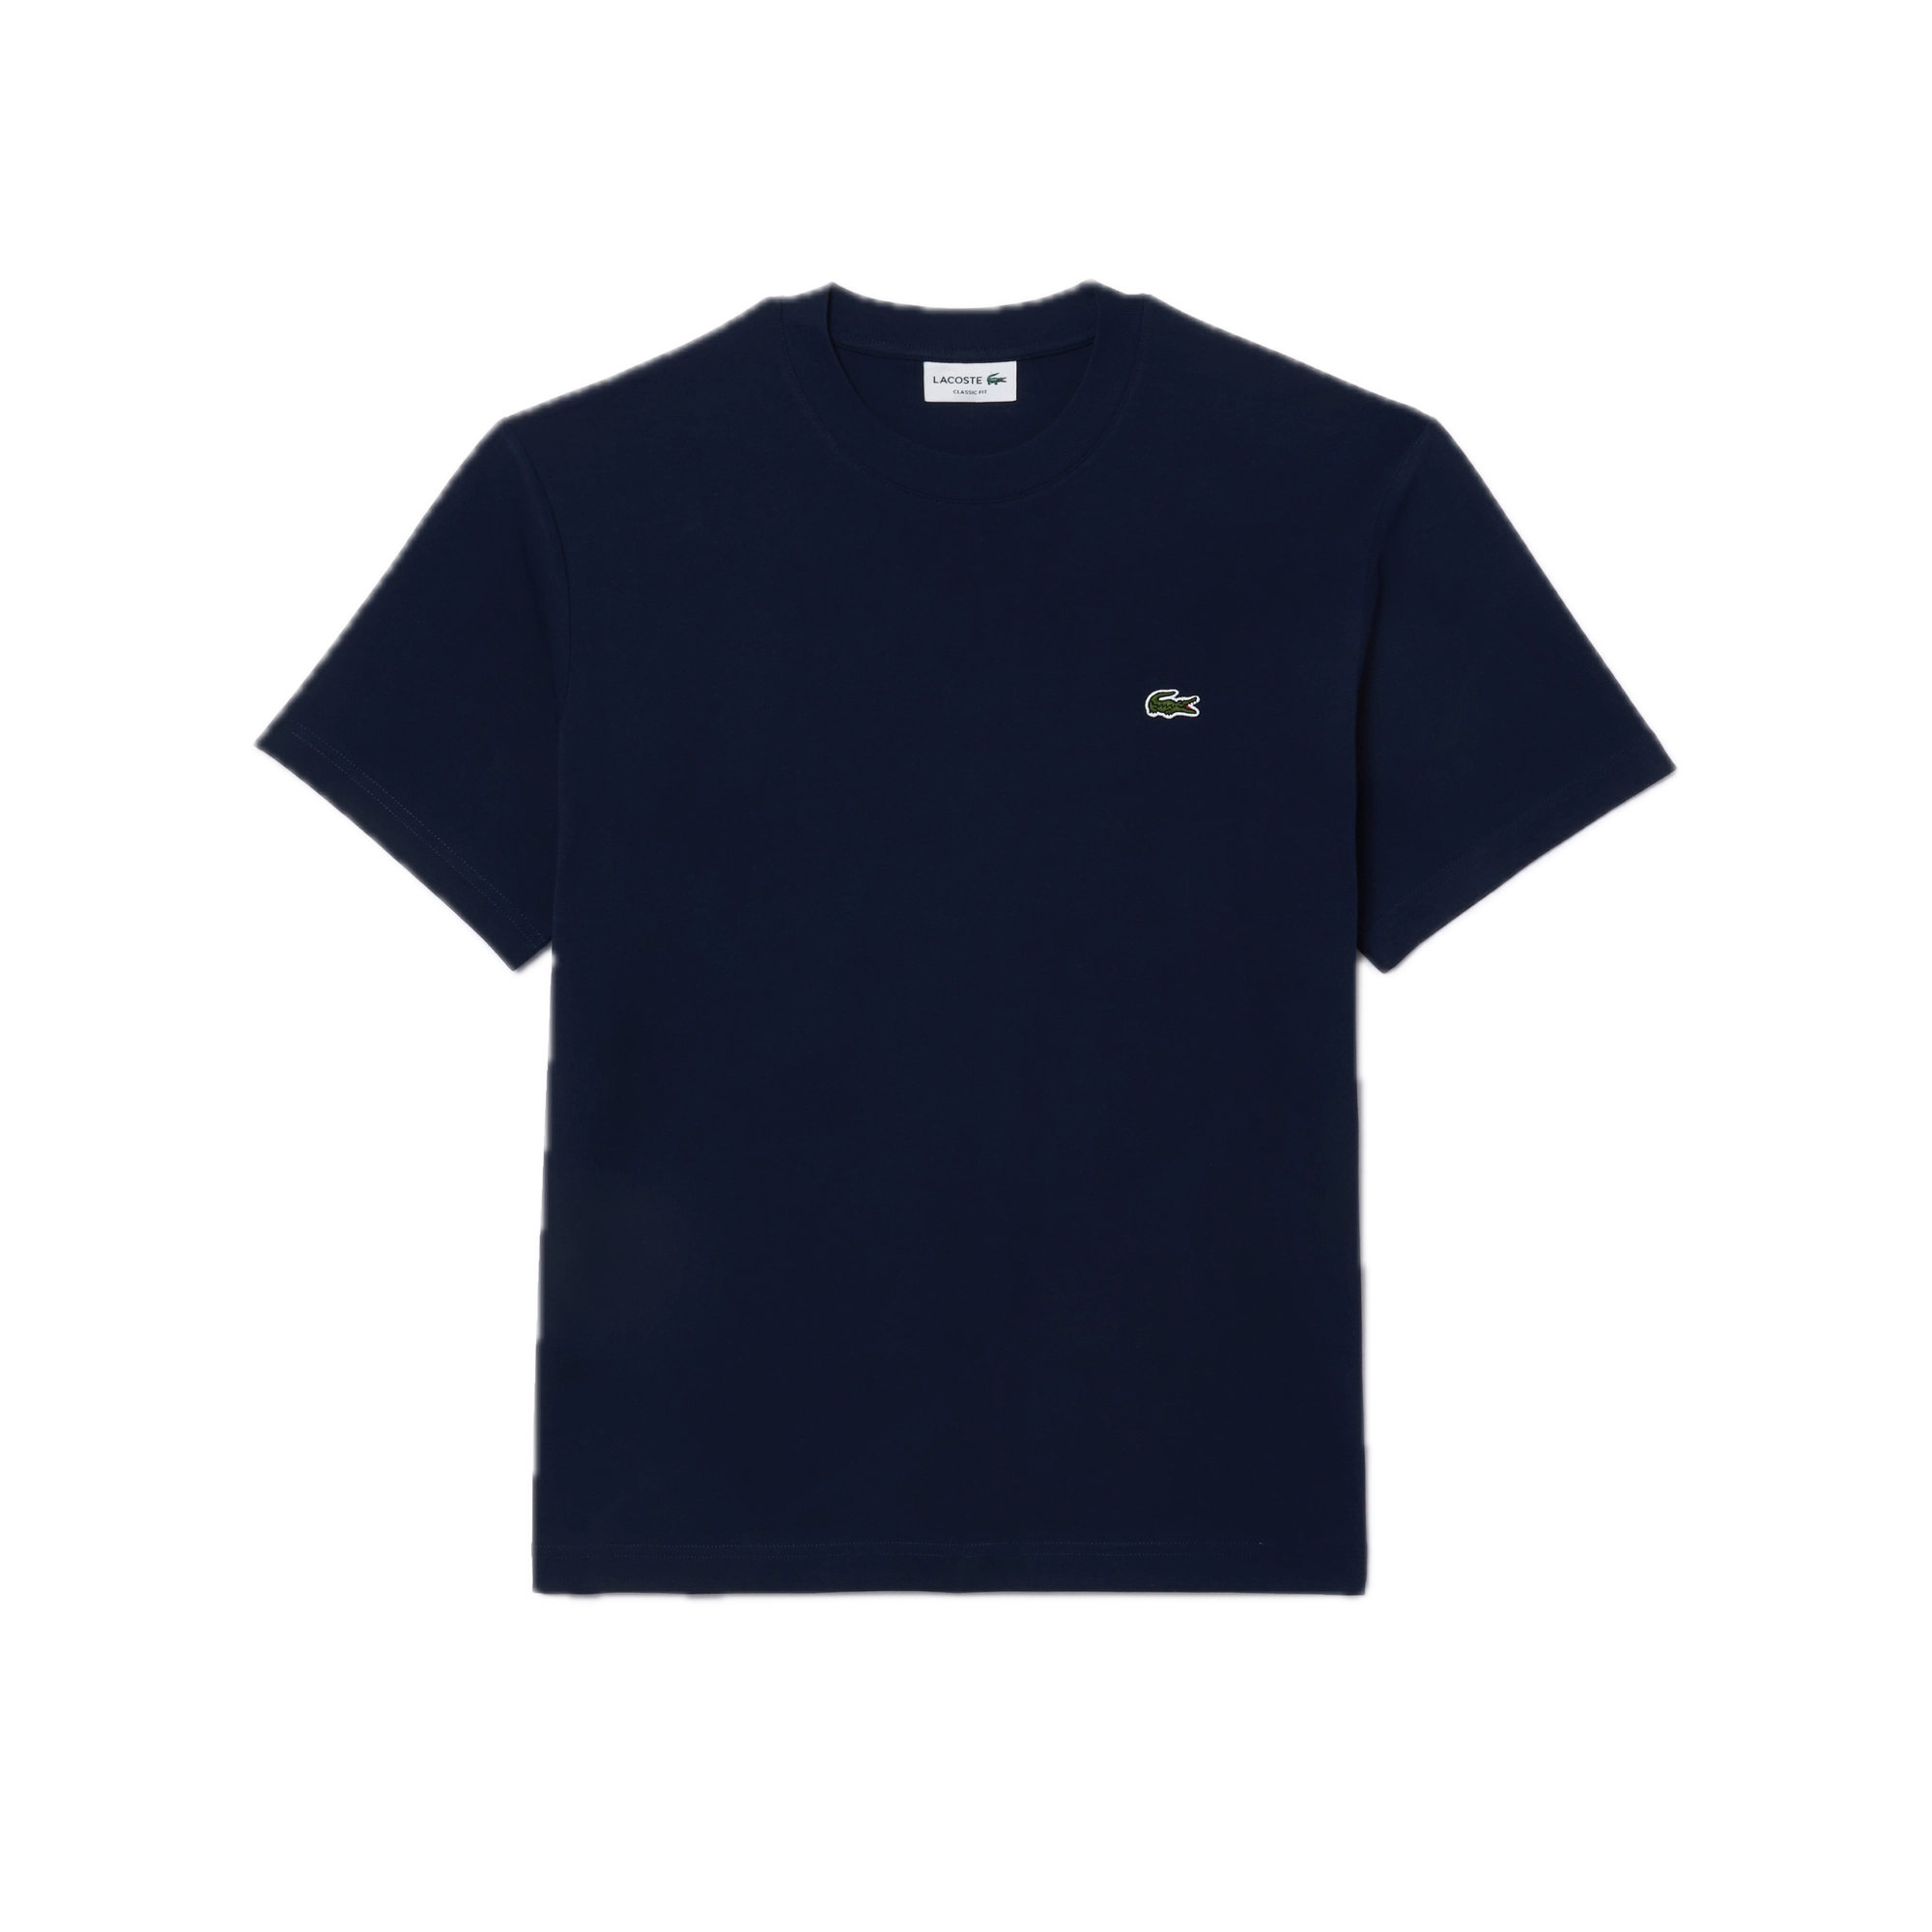 Camiseta Lacoste de Corte Clásico de Punto de Algodón Azul Marina